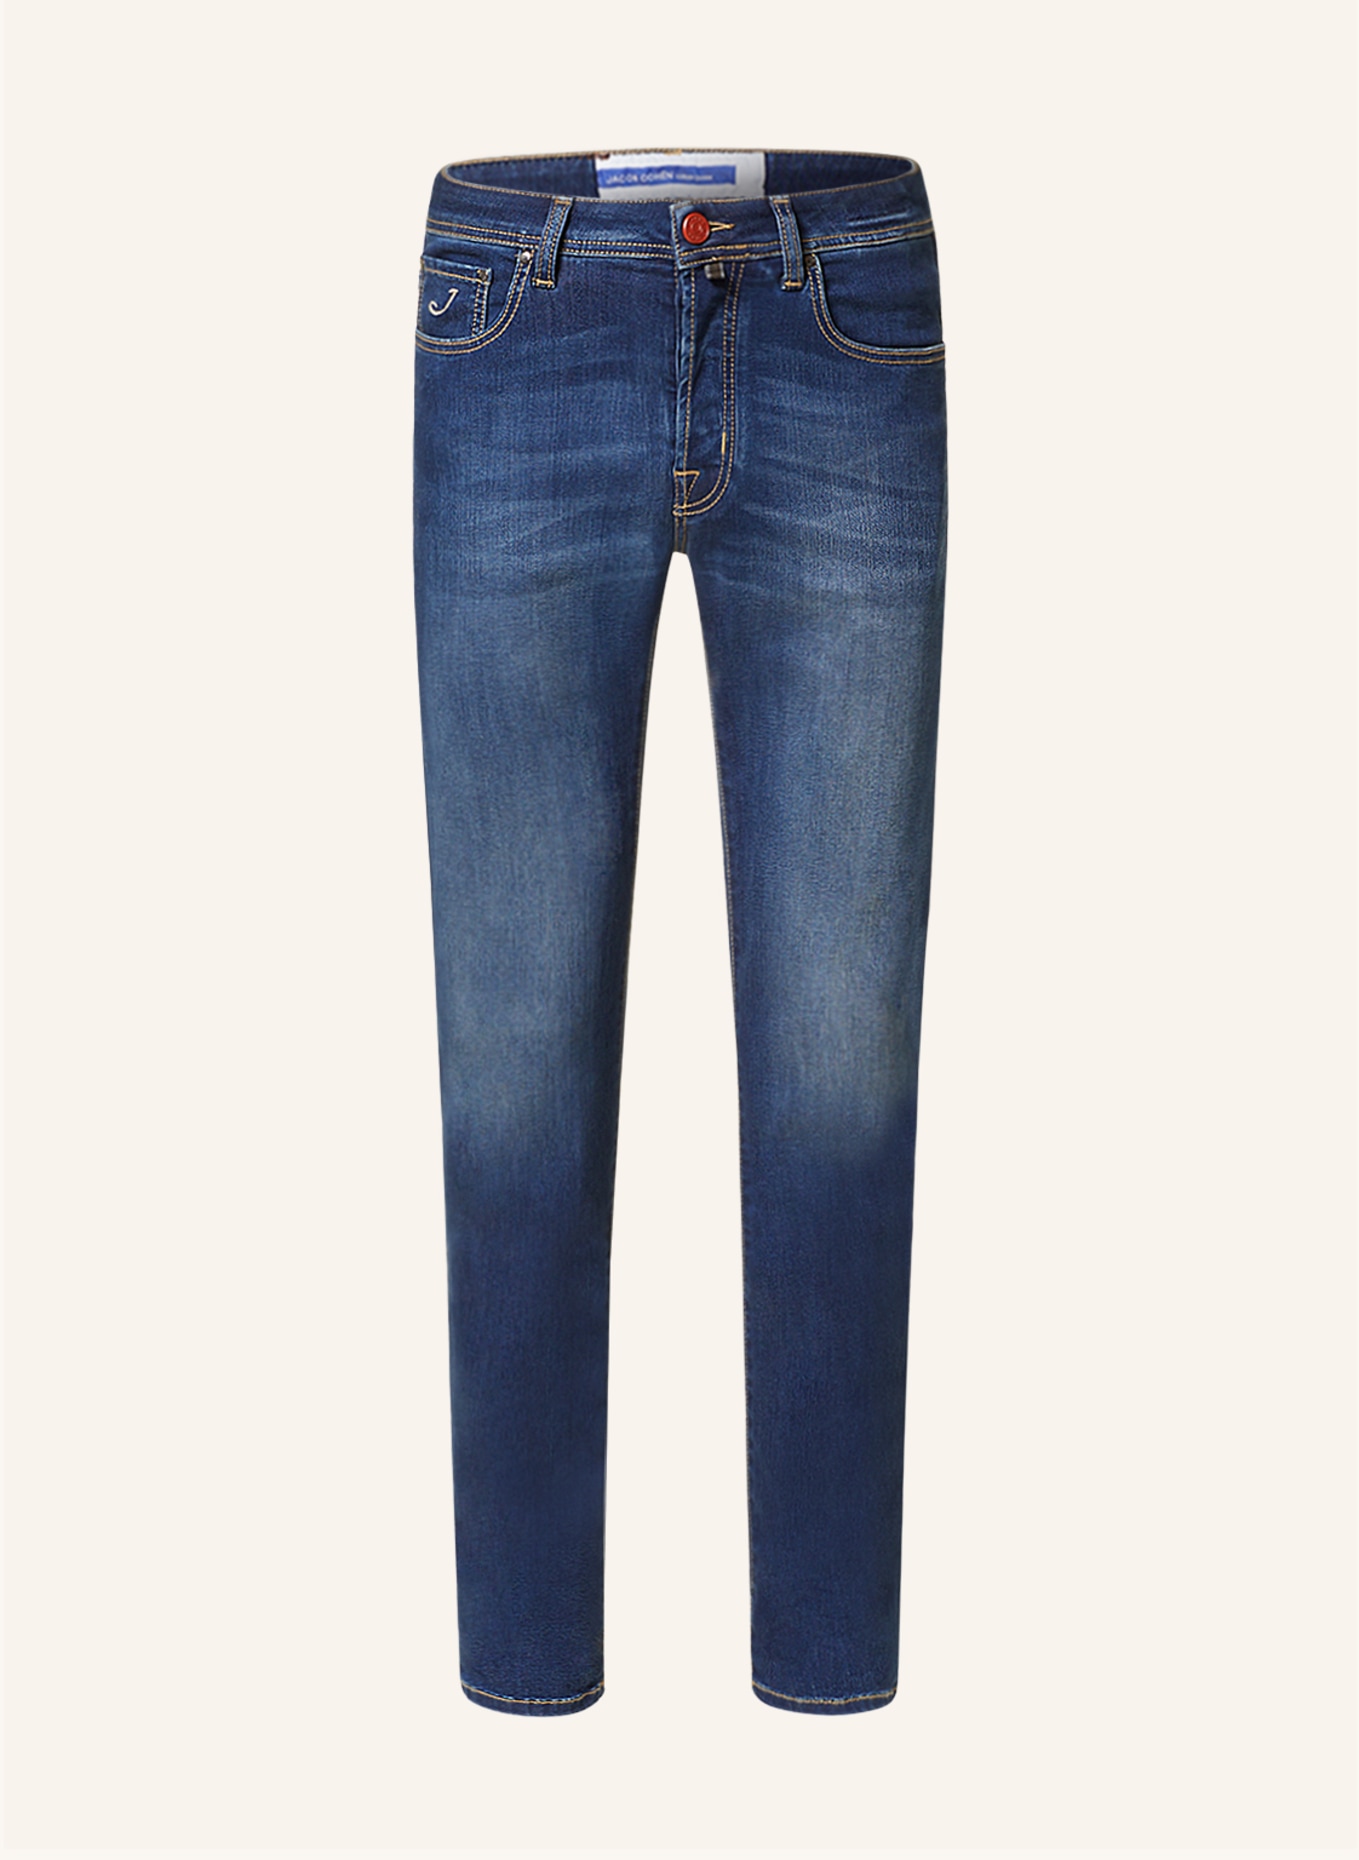 JACOB COHEN Jeans BARD Slim Fit, Farbe: 554D Mid Blue(Bild null)